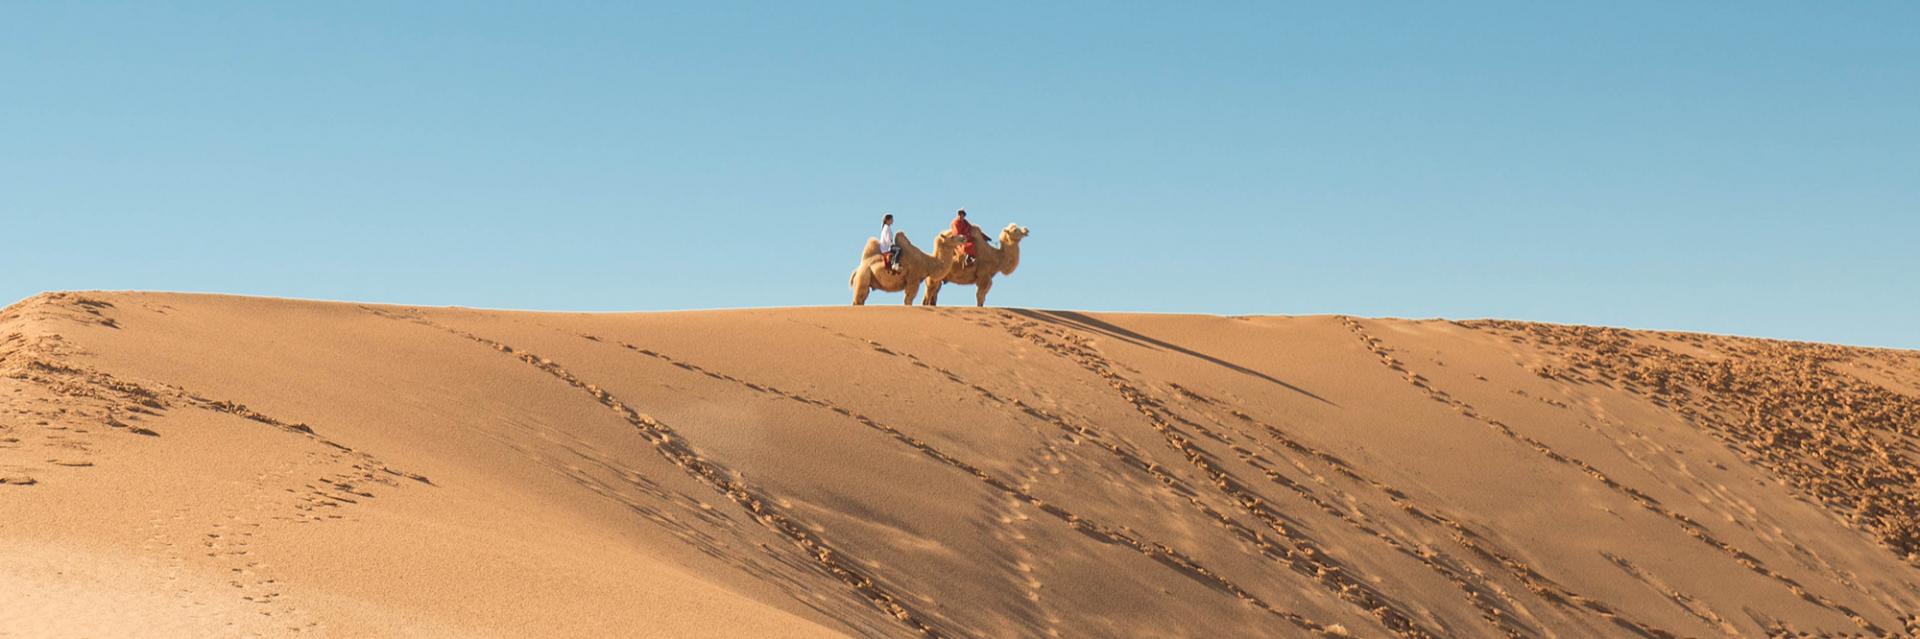 Camel riders on Sand Dune